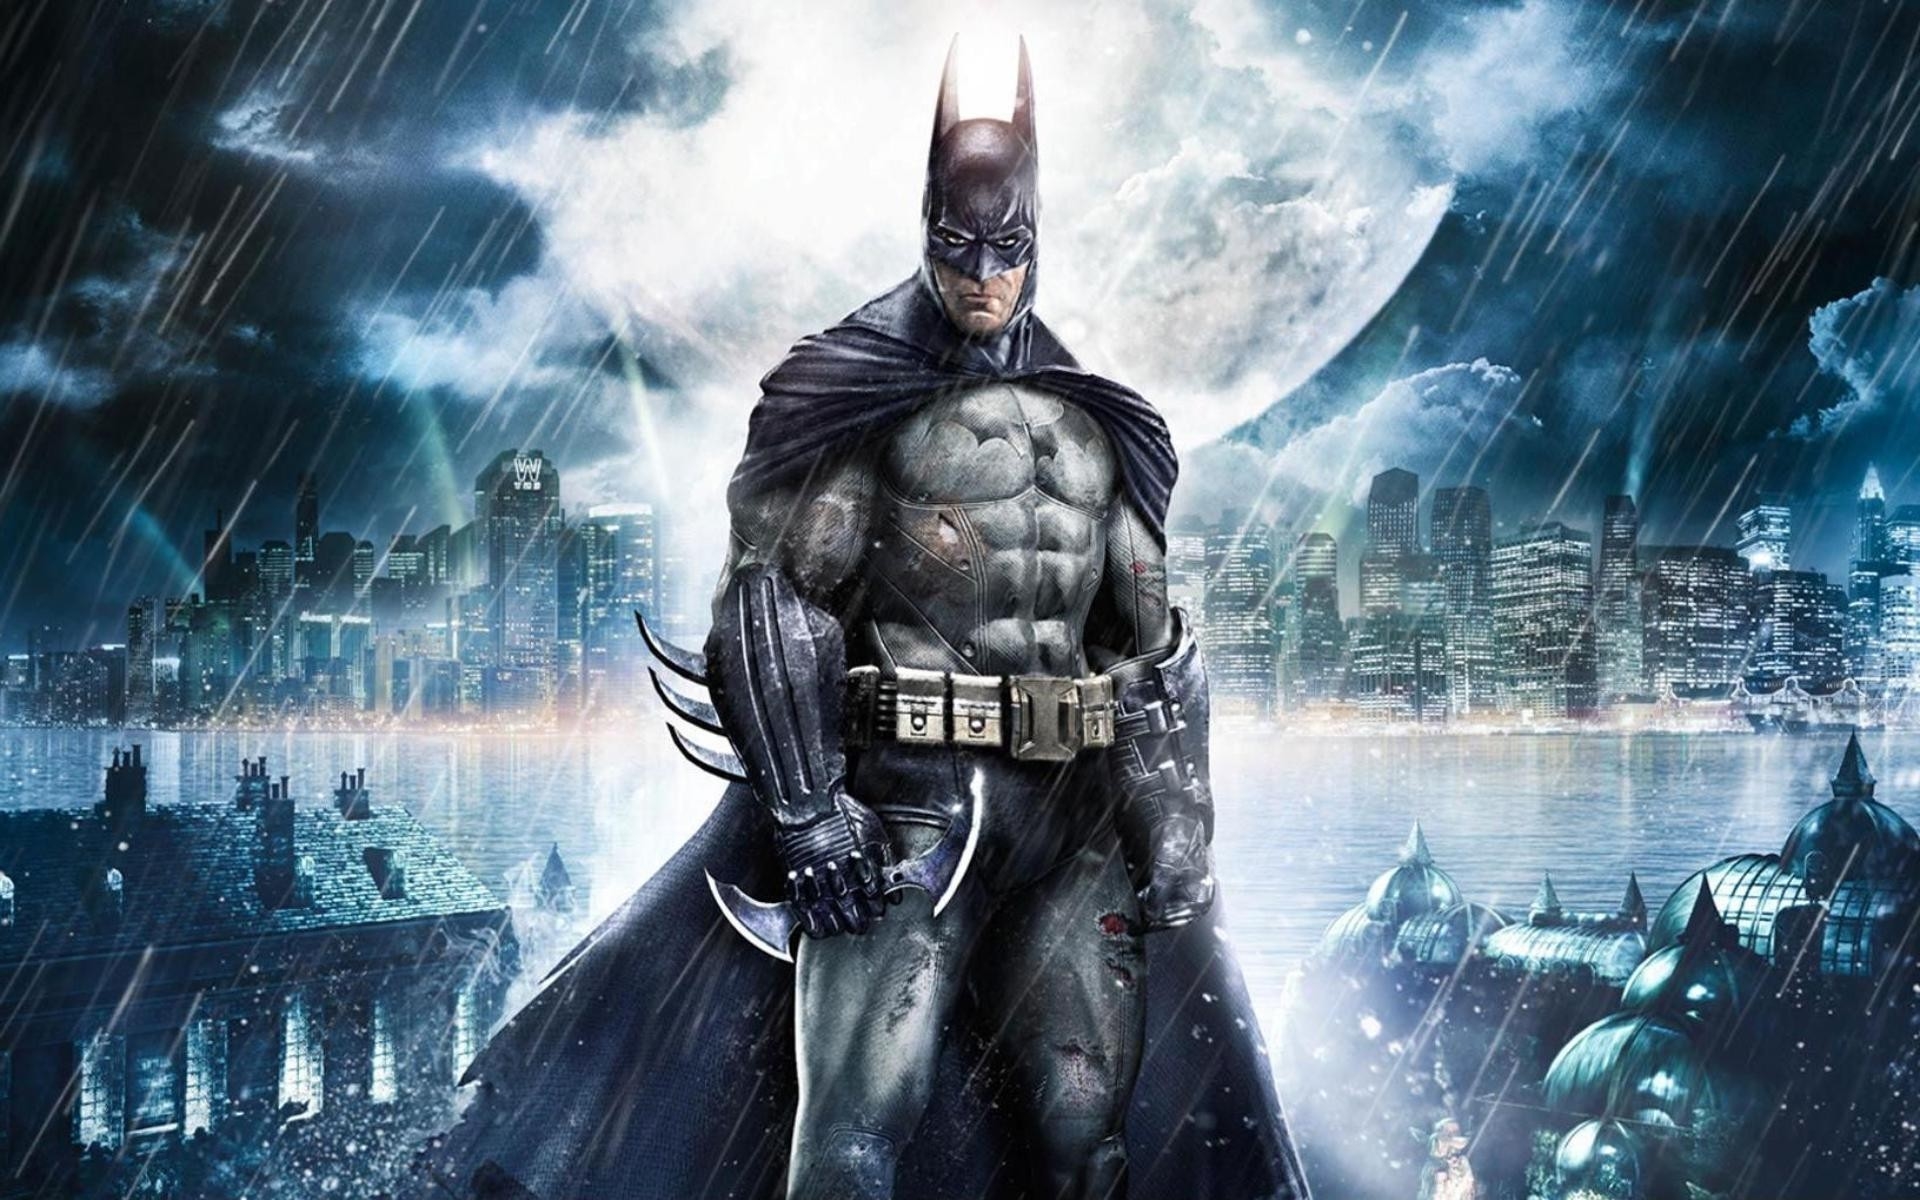 Batman Wallpapers Free Download